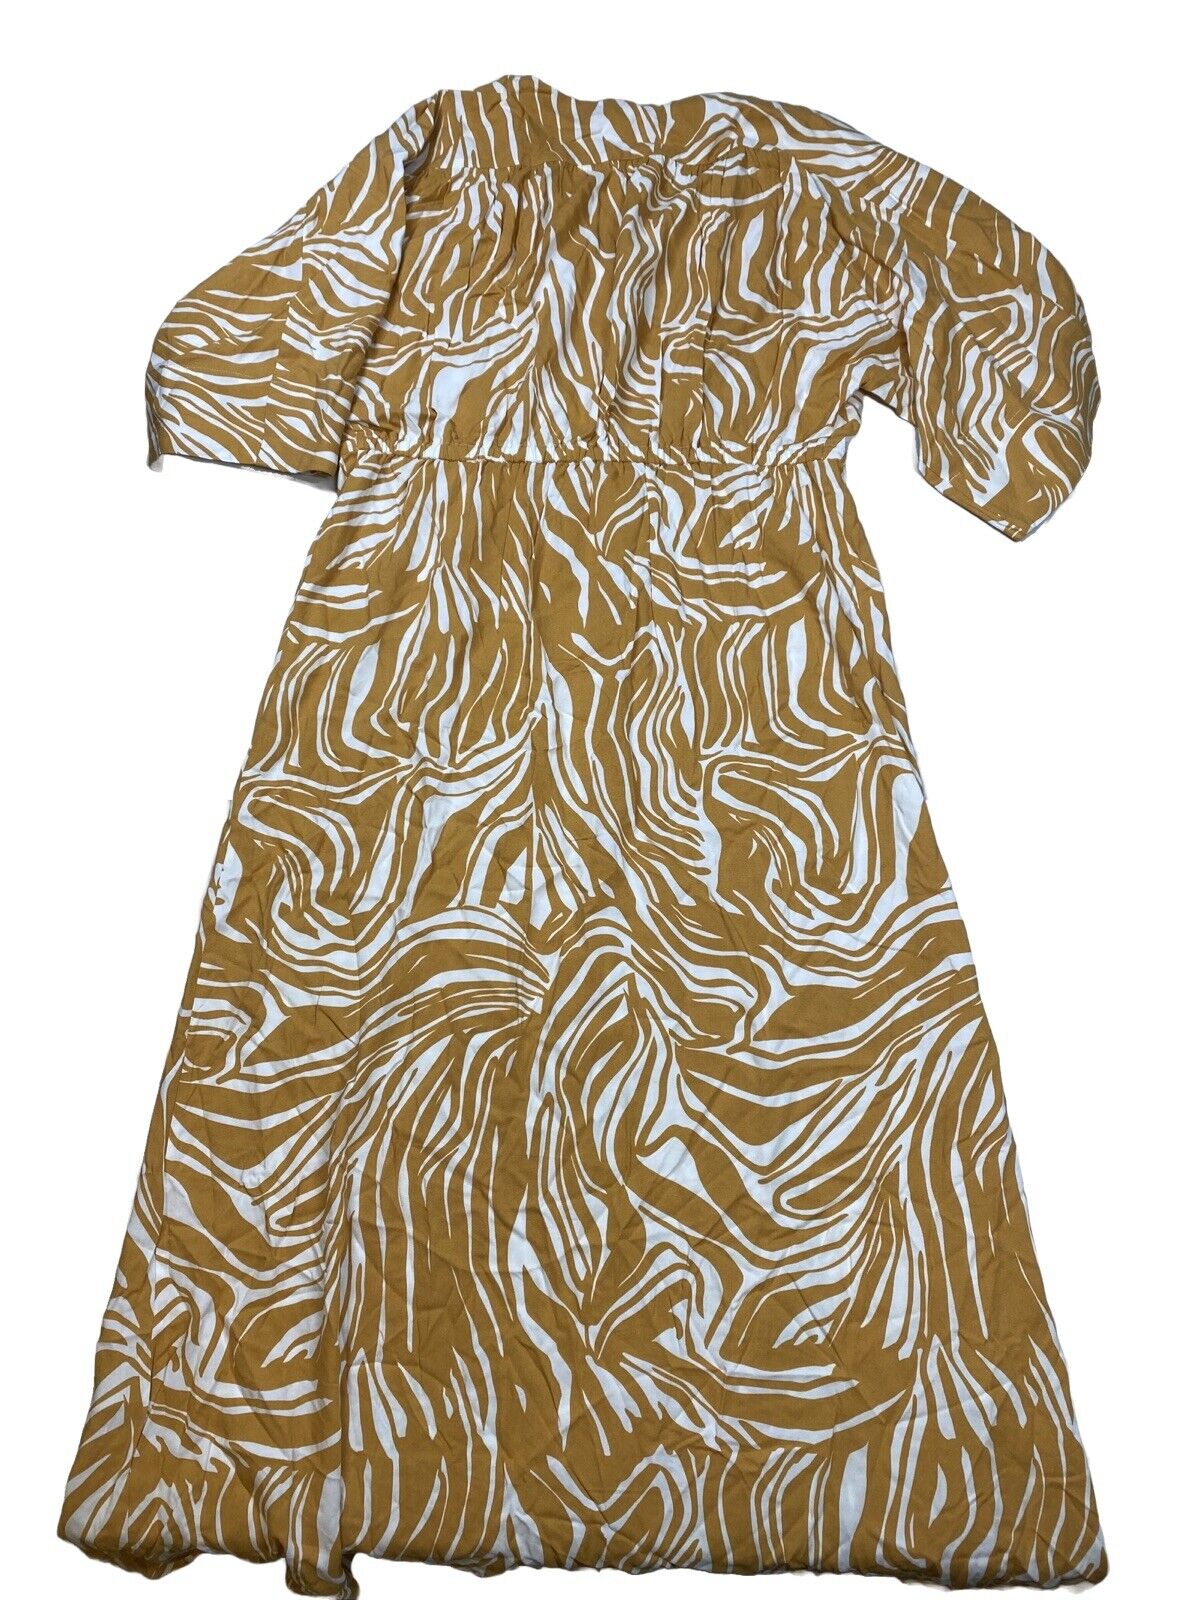 NEW Soft Surroundings Women's Yellow Golden Age Shirt Dress - S (6-8)